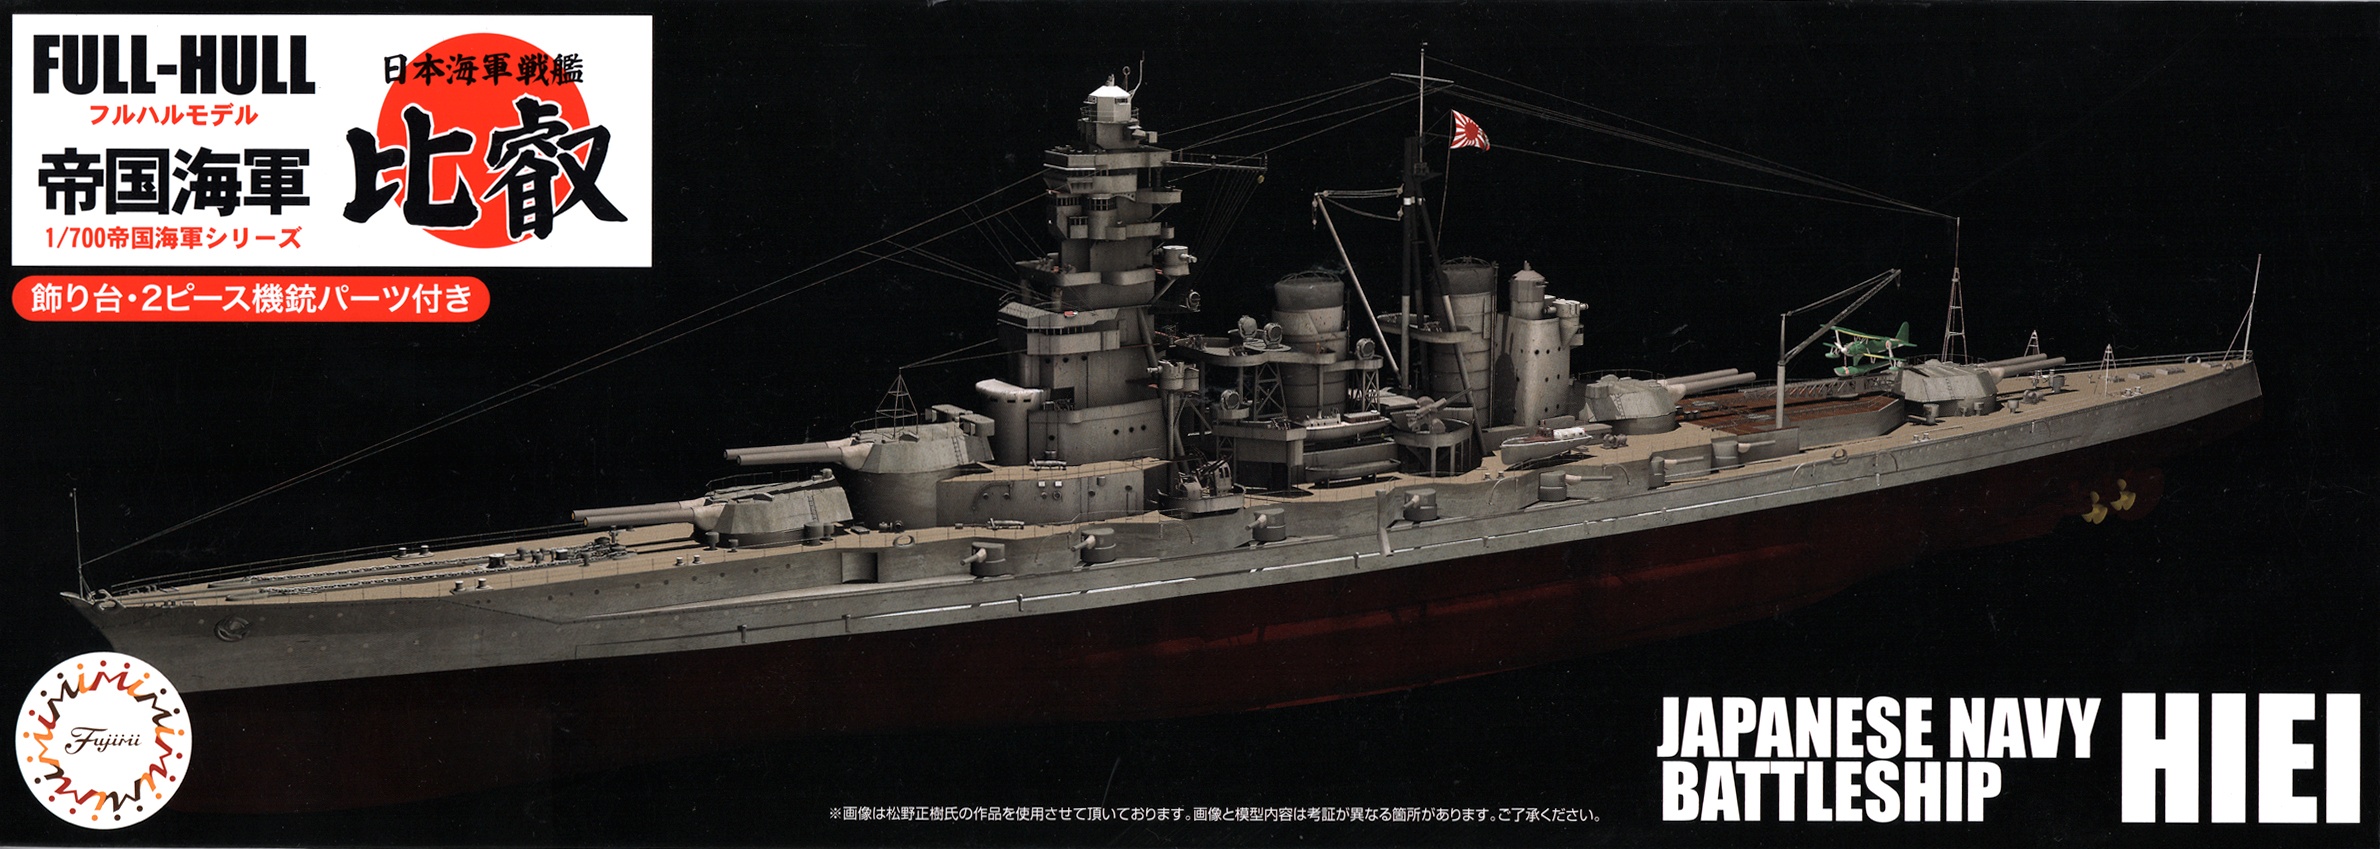 Fujimi FHSP-2 IJN Japanese Navy Battleship Hiei Full Hull Model 1/700 scale kit